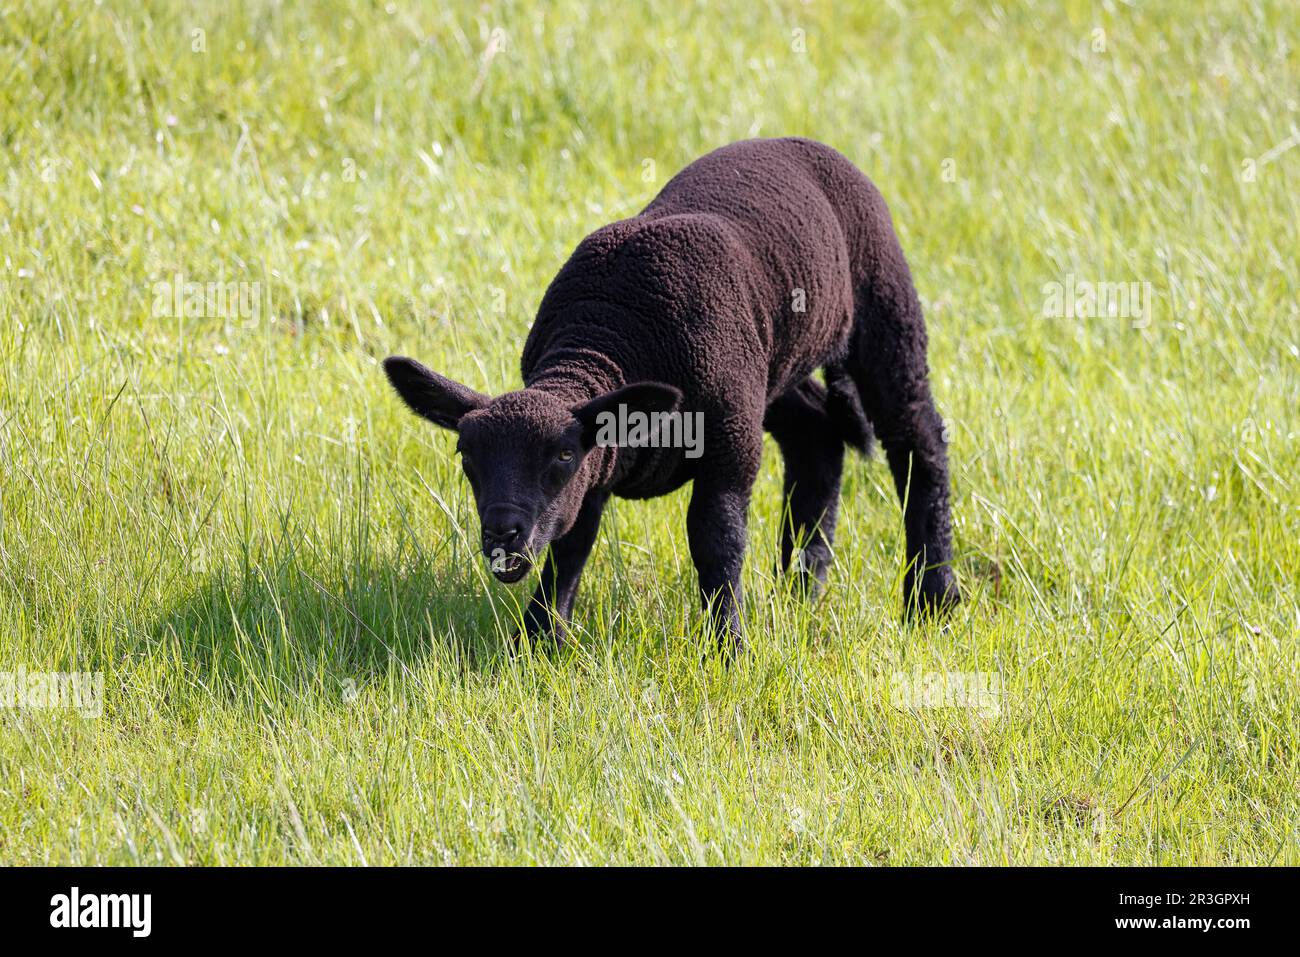 Oveja doméstica negra (Ovis gmelini aries) cordero comiendo hierba, niño animal, Schleswig-Holstein, Alemania Foto de stock